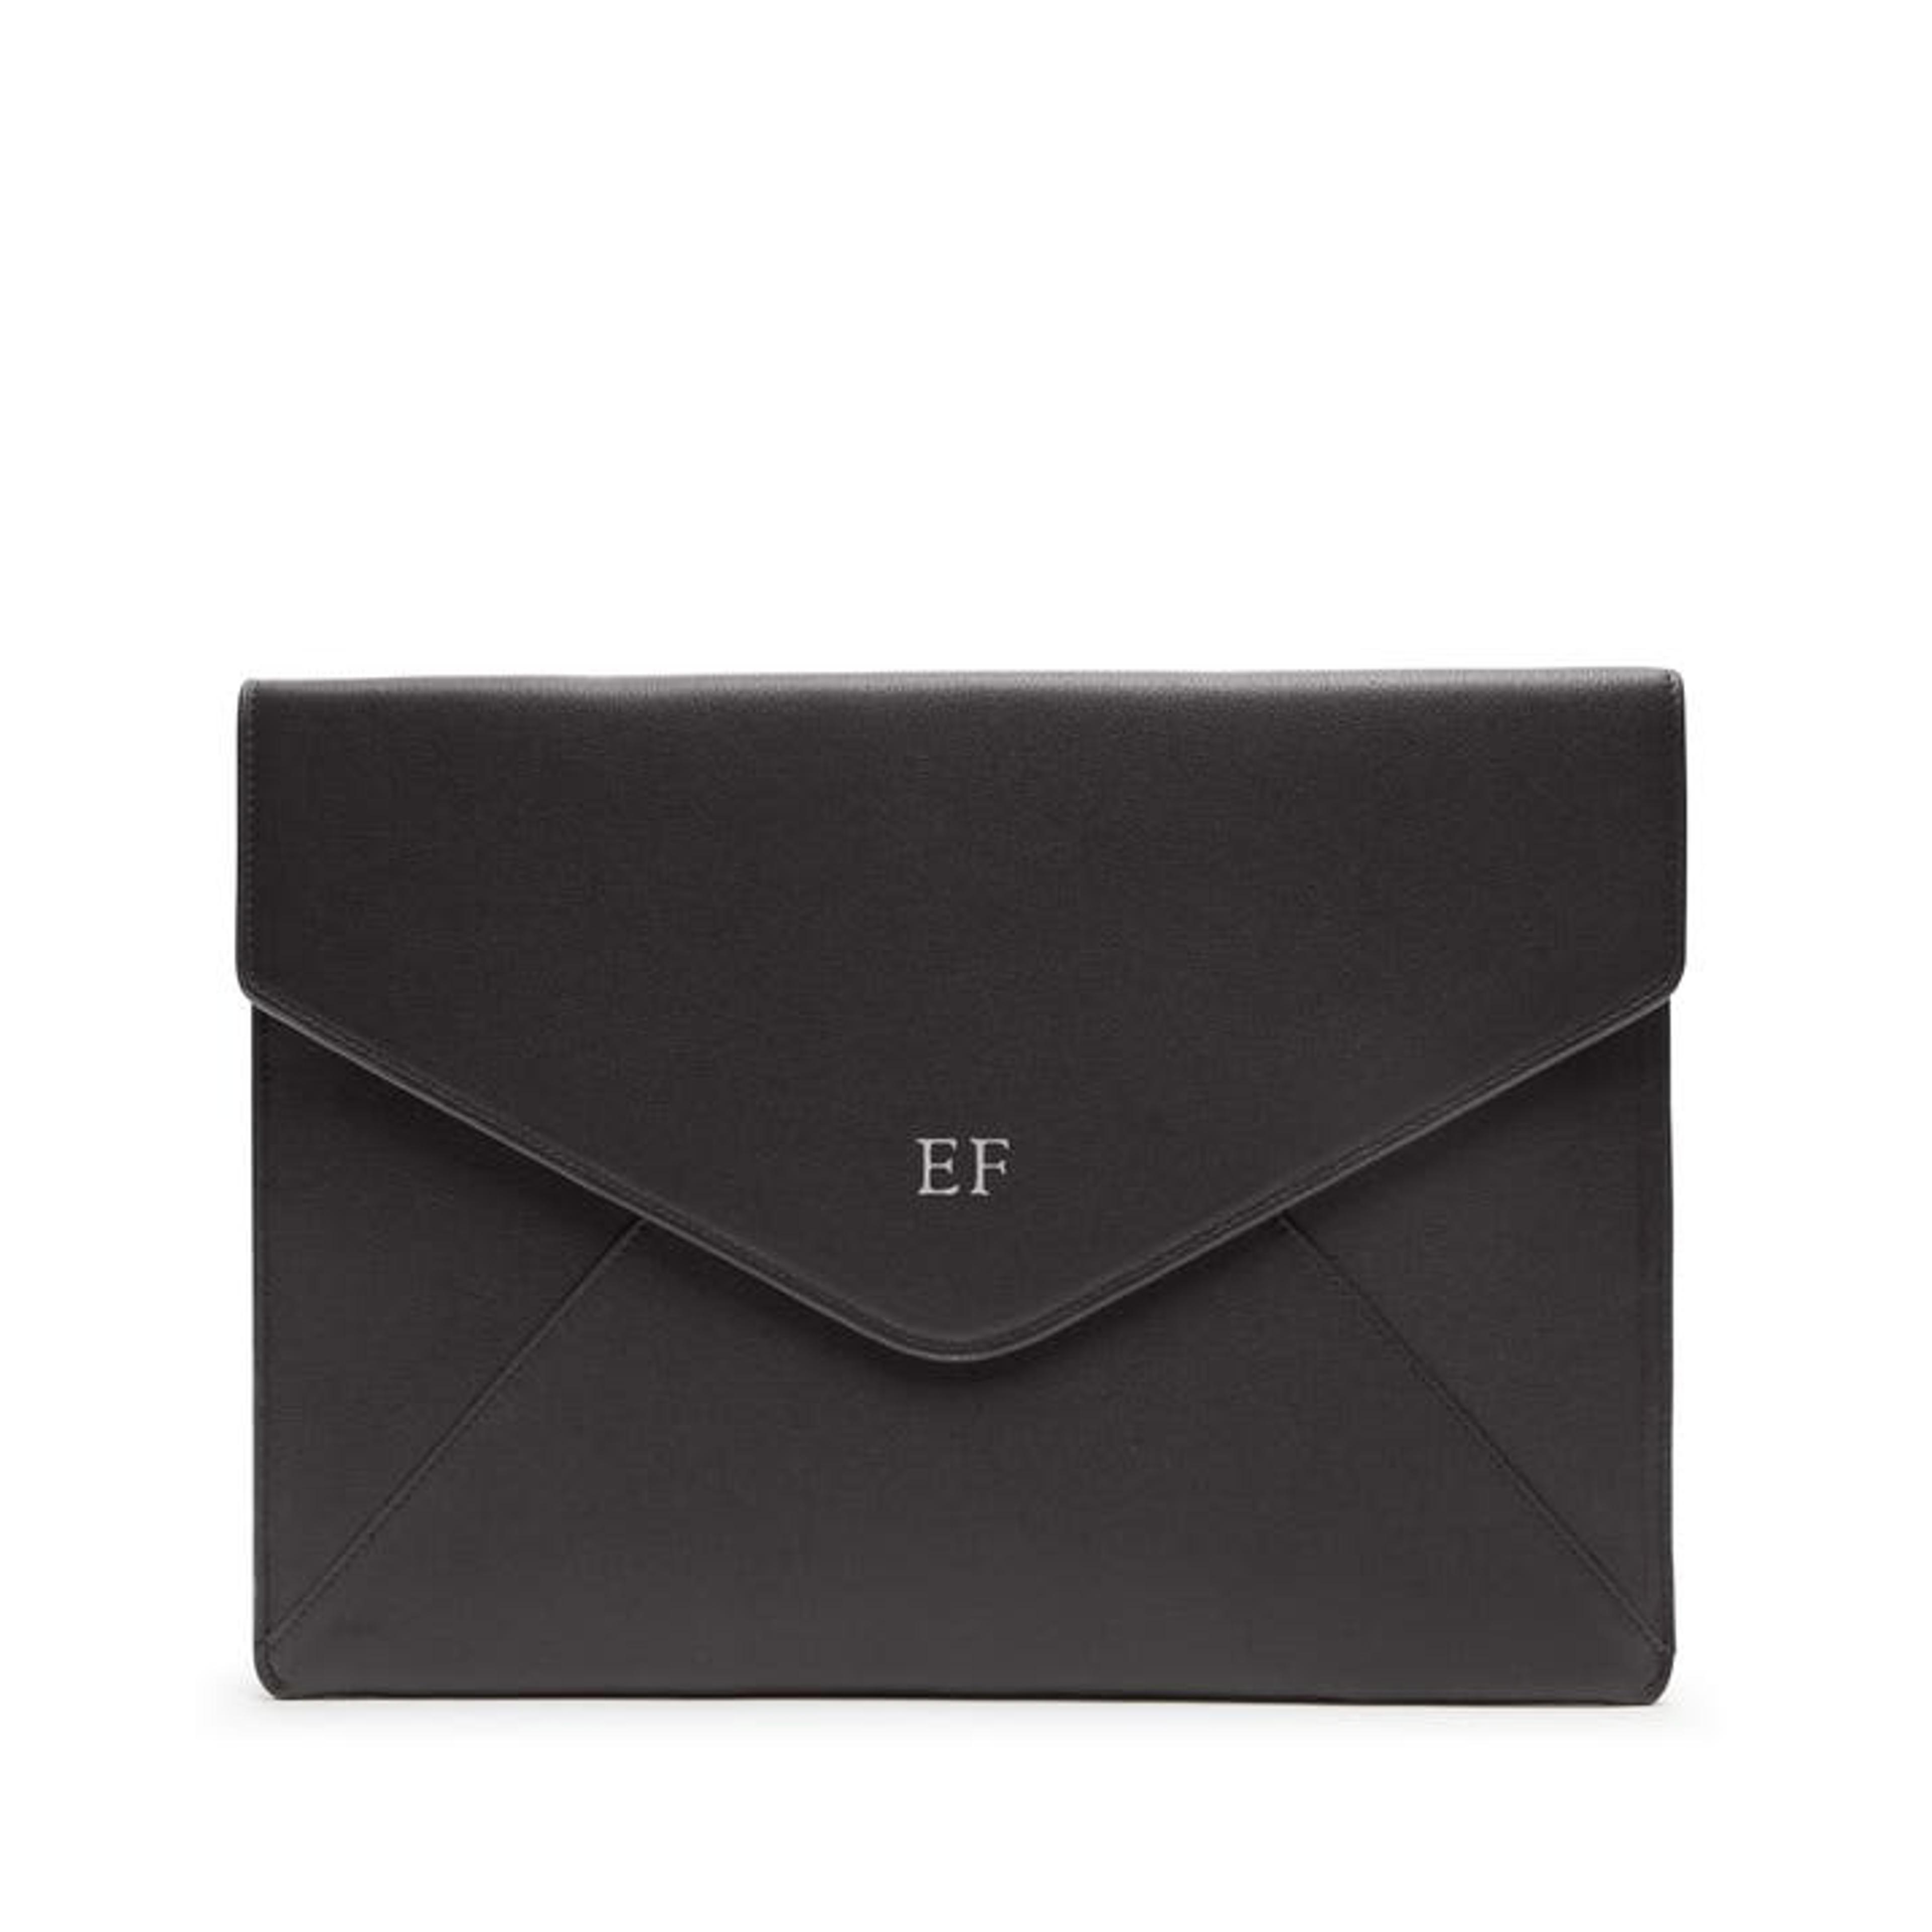 Laptop Envelope Sleeve | Italian leather Oxblood/Oxblood Suede Red